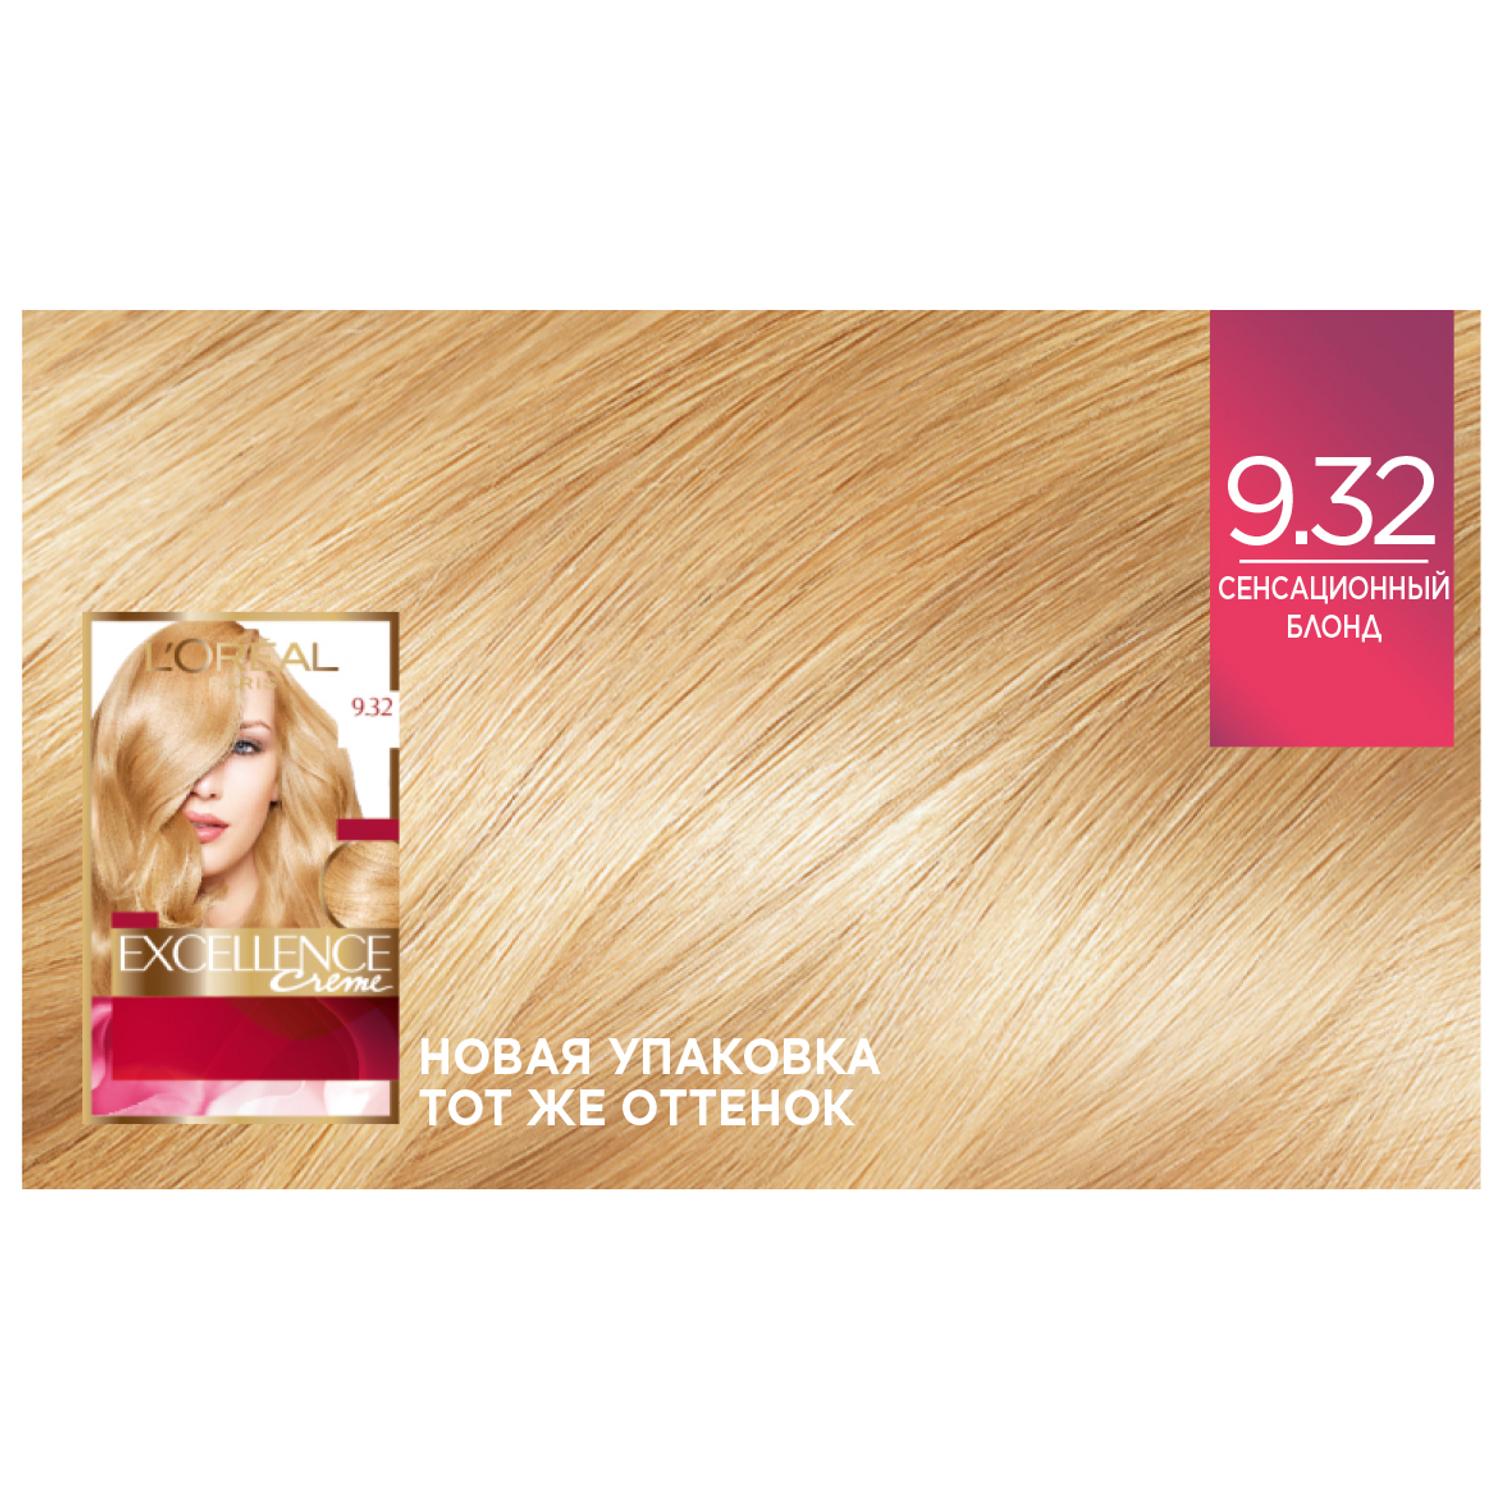 L'Oreal Paris краска для волос Excellence, 9.32